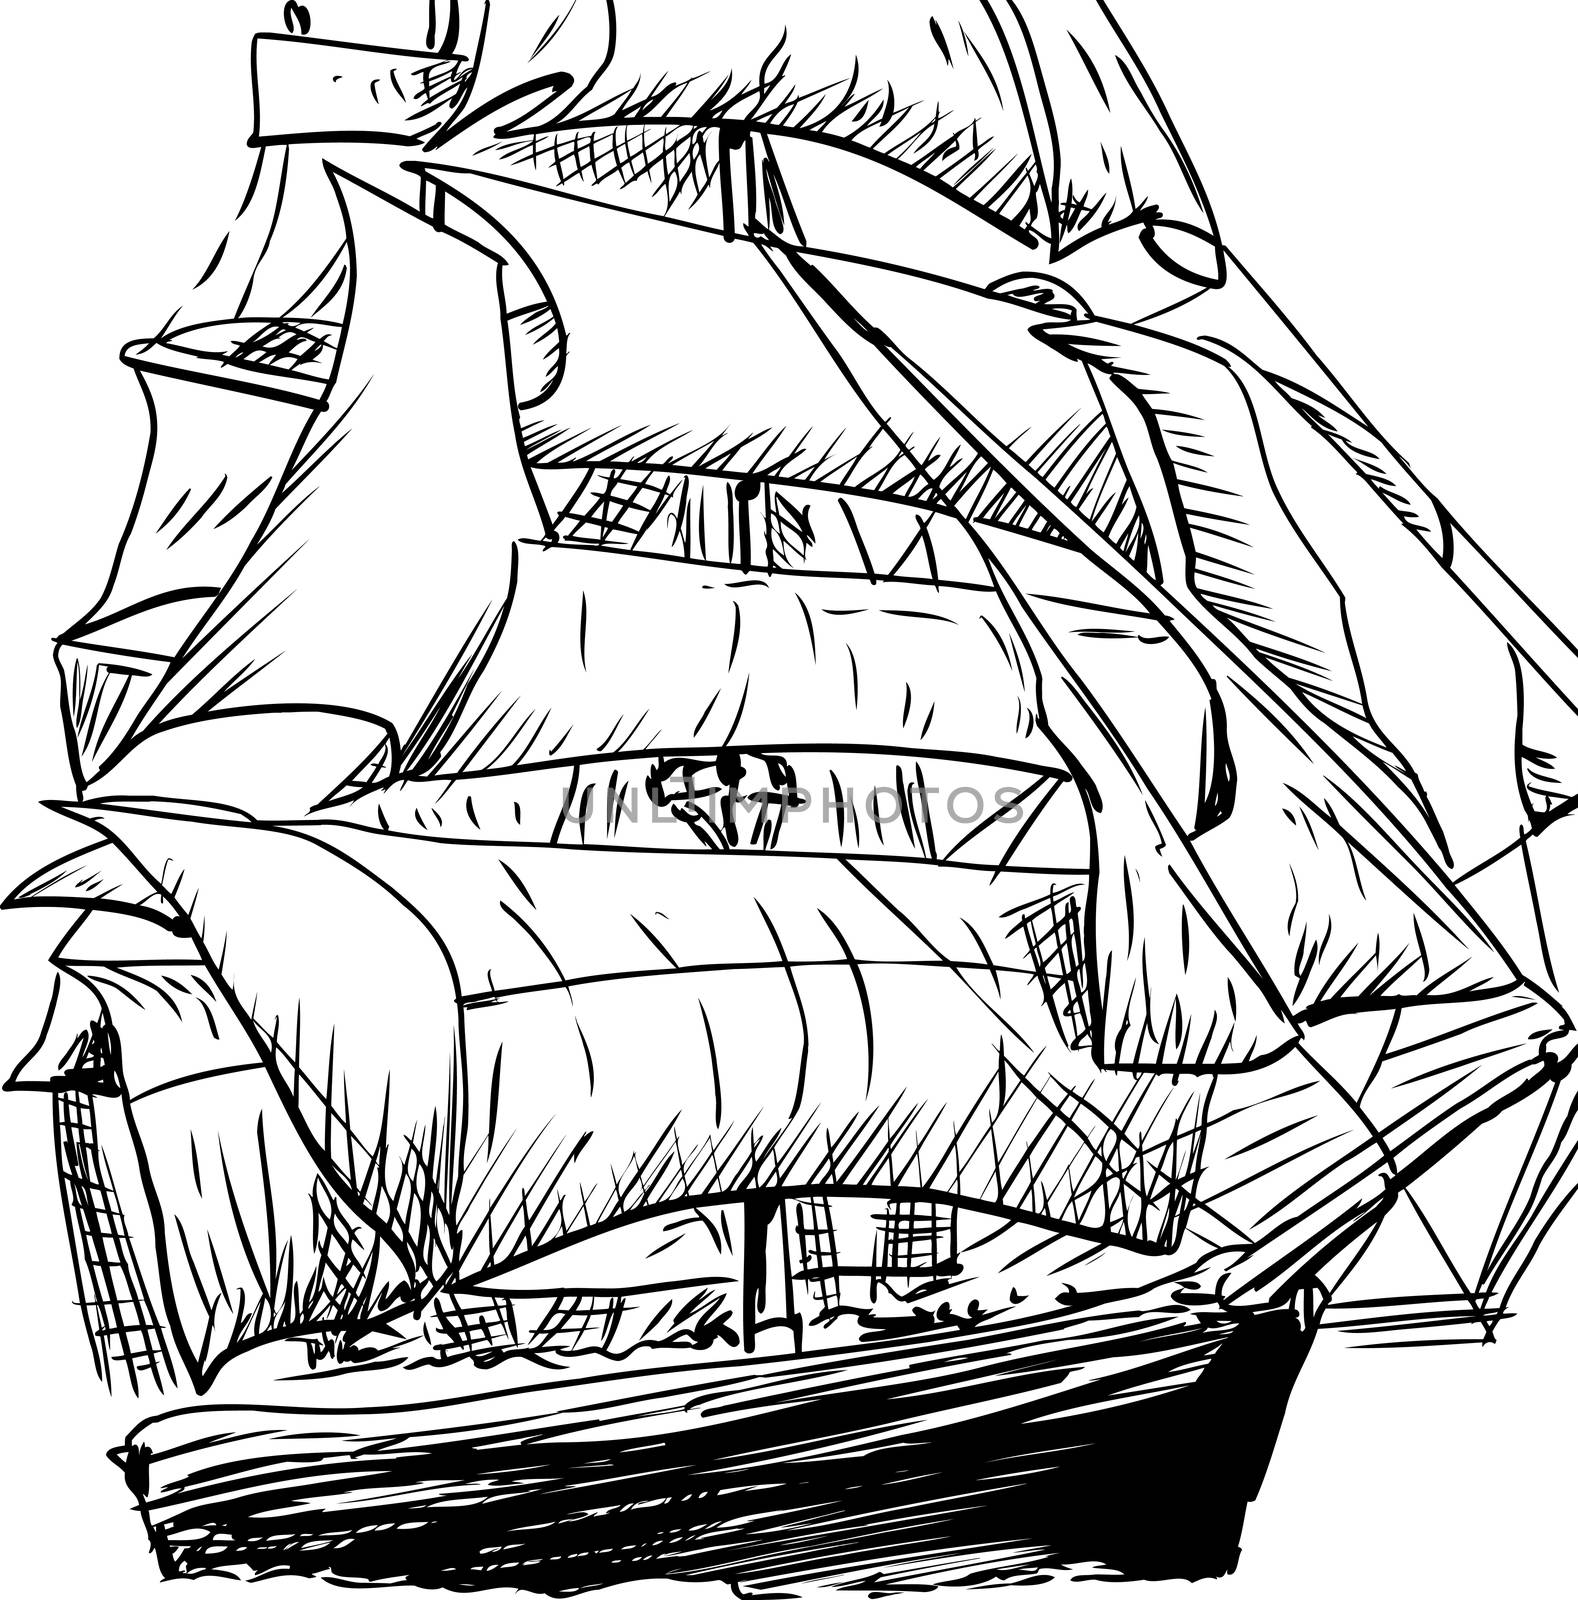 Single Clipper Ship Doodle by TheBlackRhino